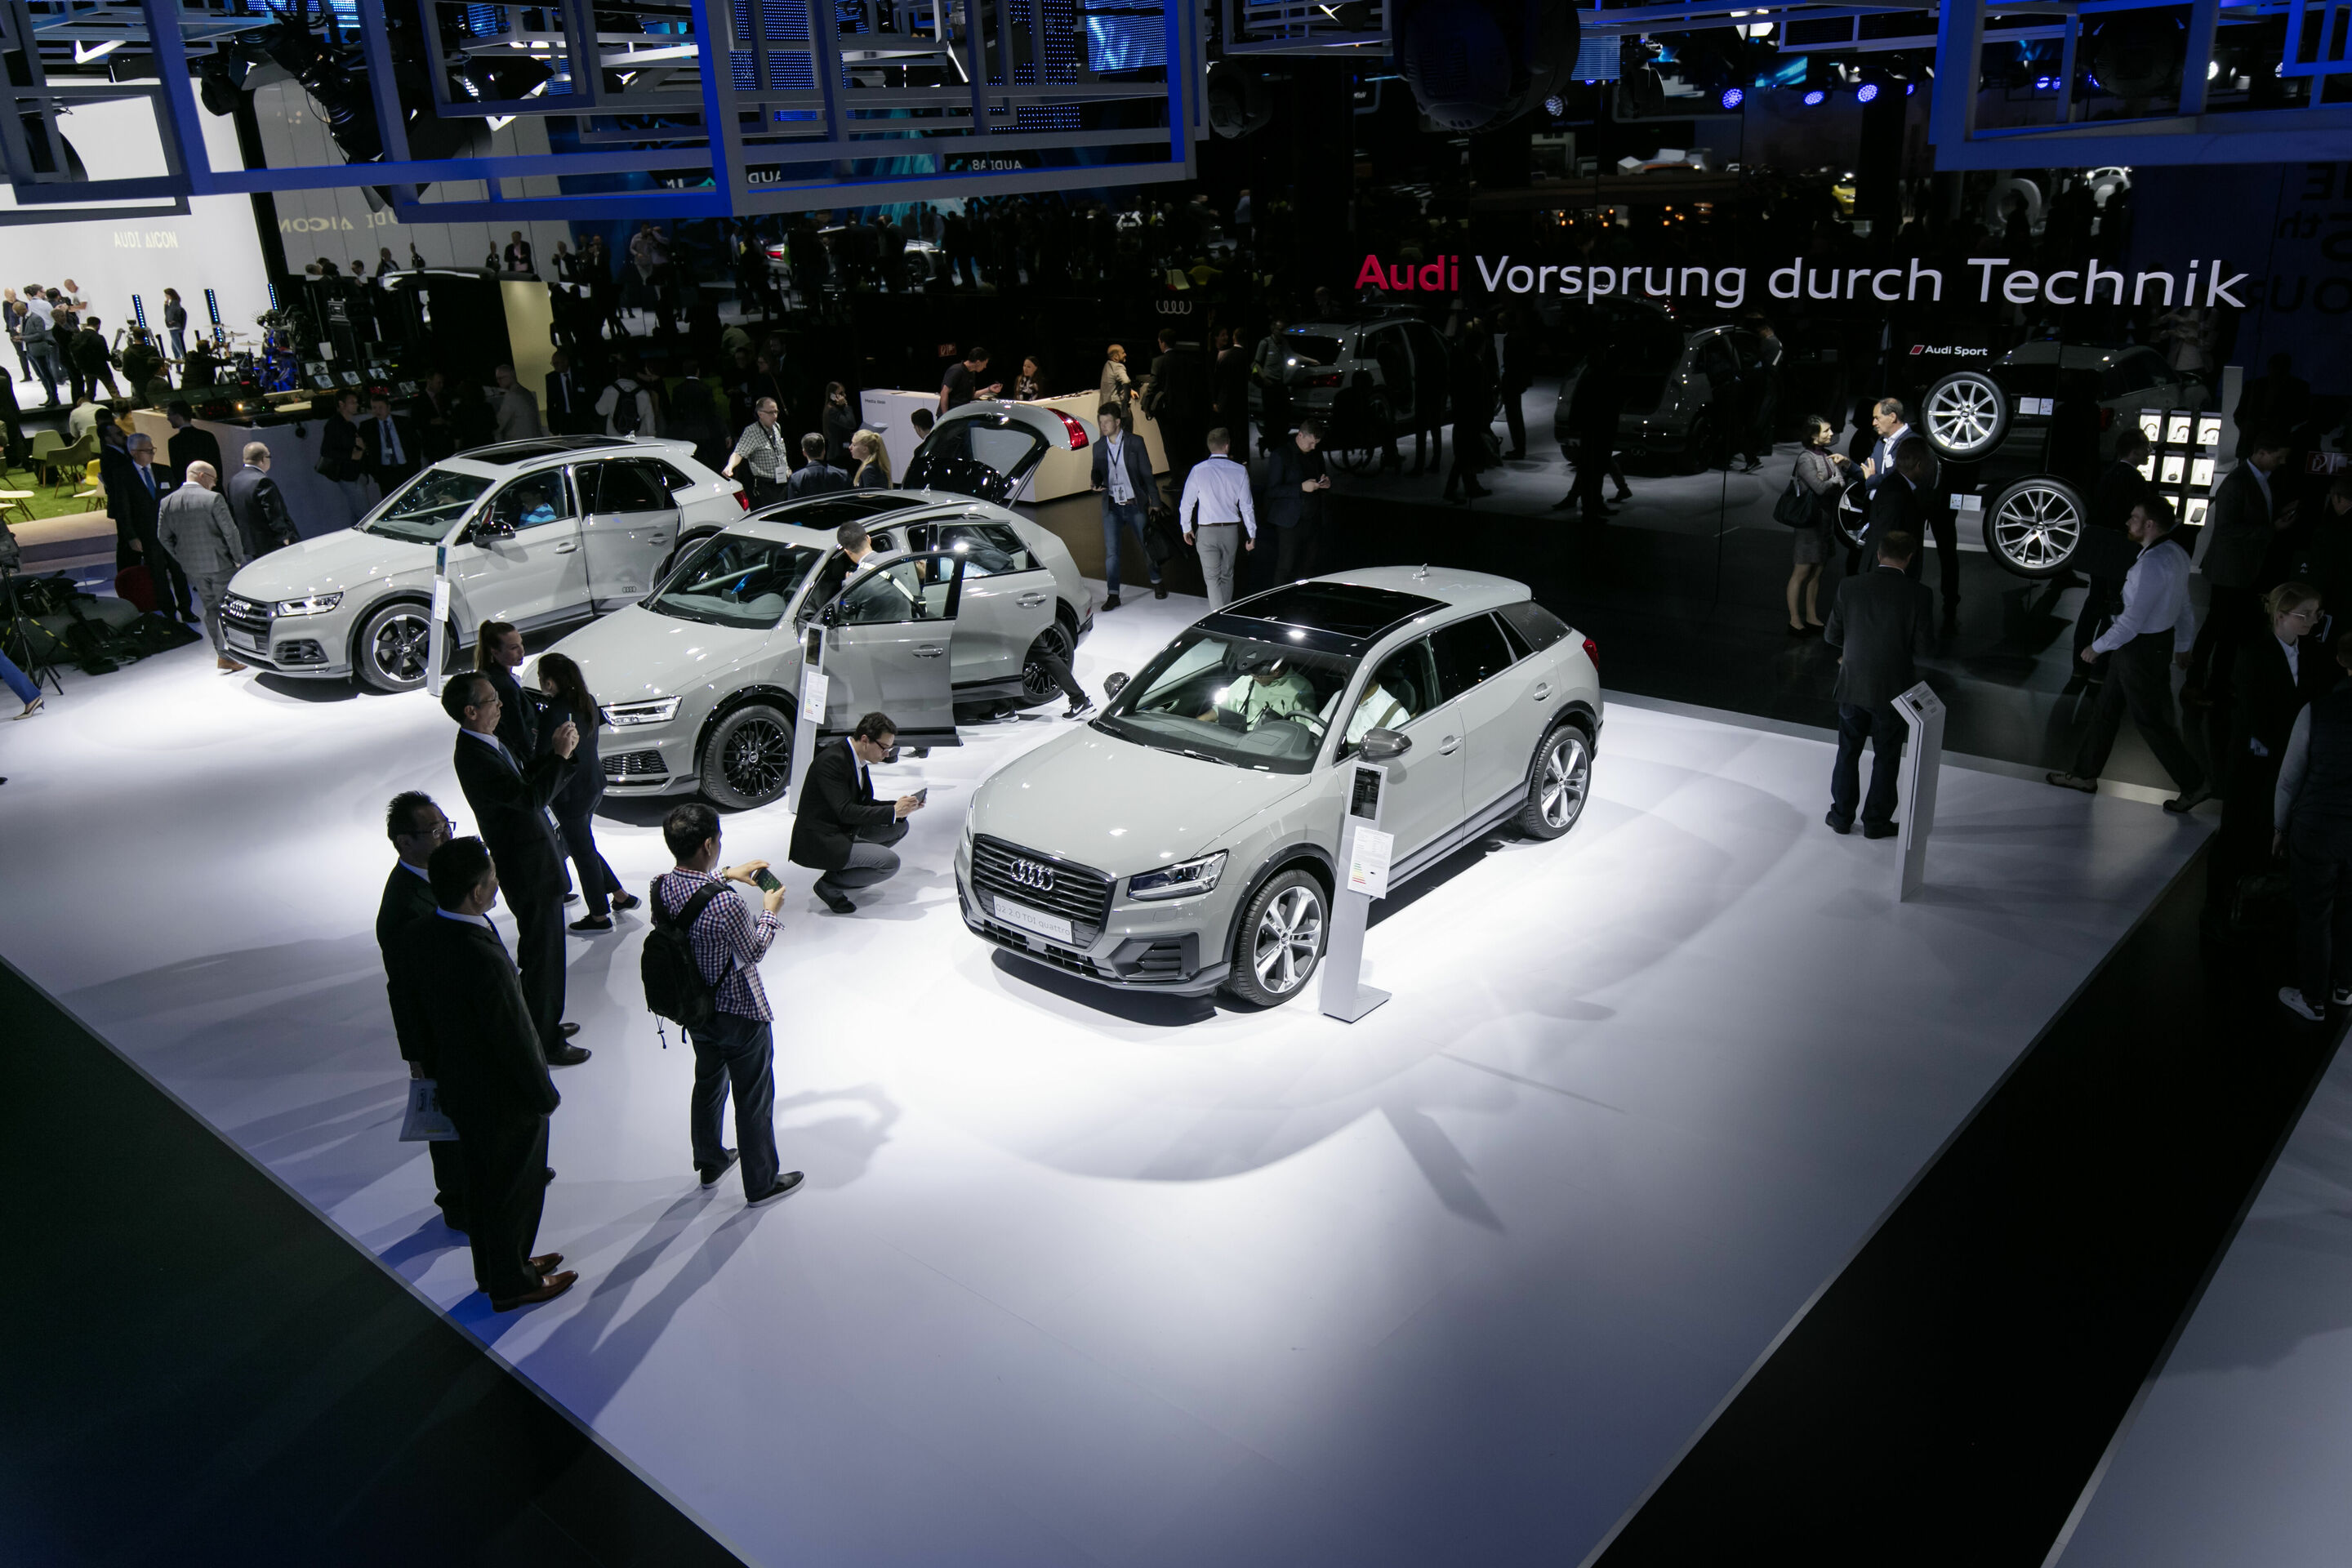 Audi press conference at the IAA in Frankfurt